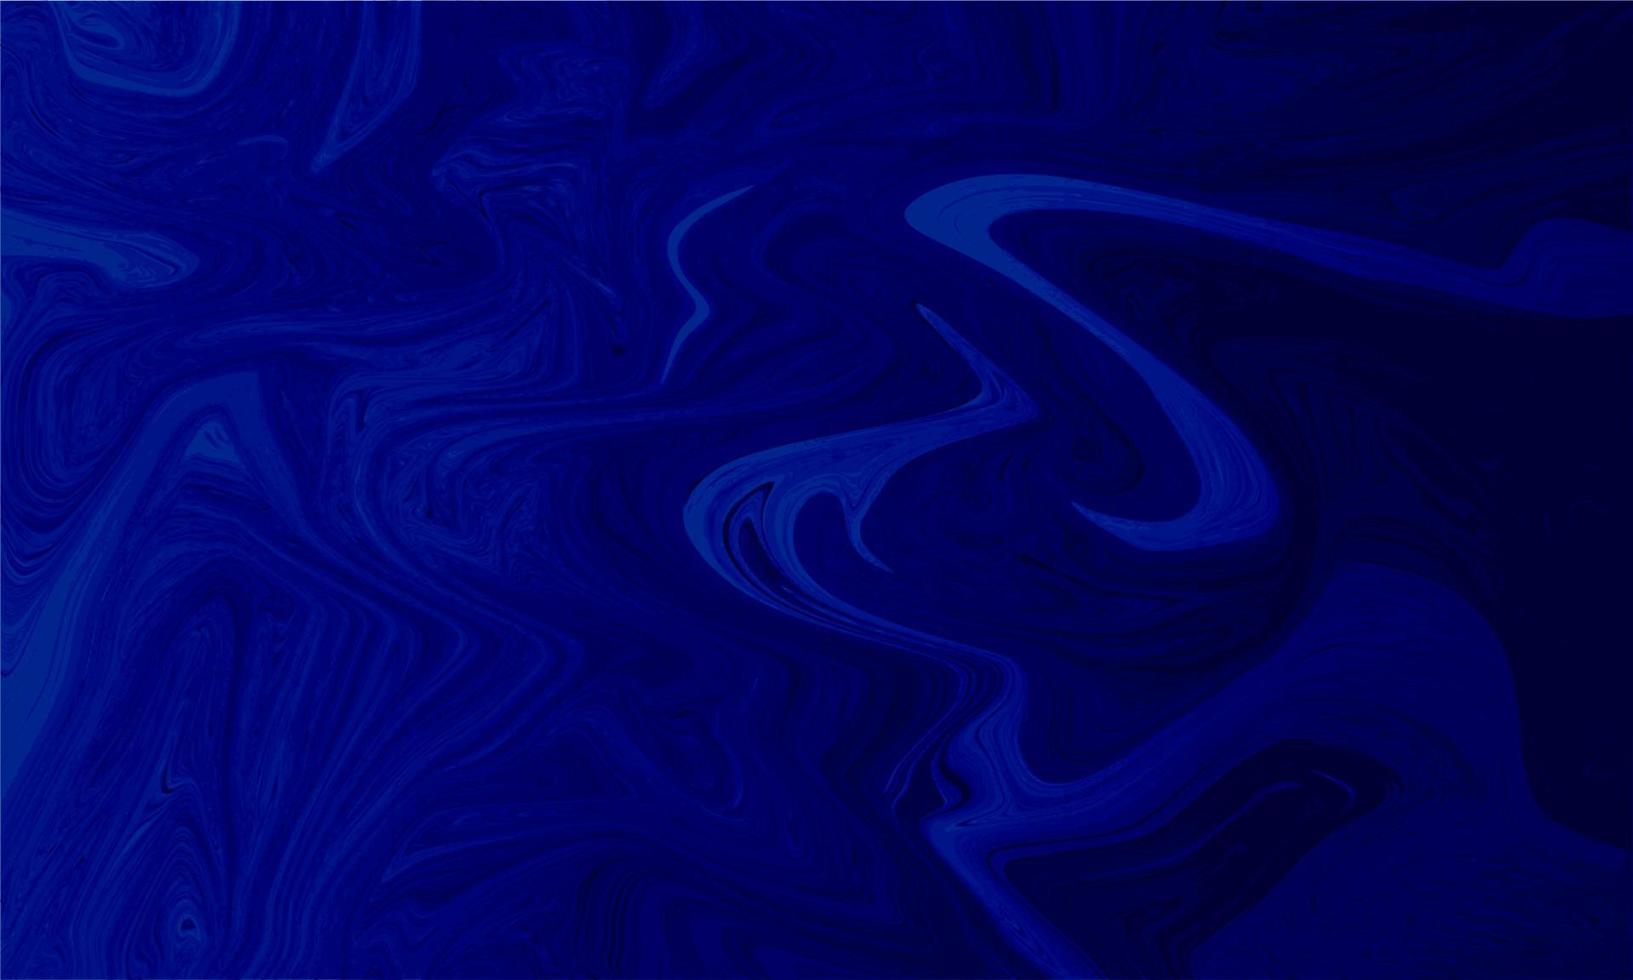 fond de marbre liquide bleu foncé abstrait vecteur